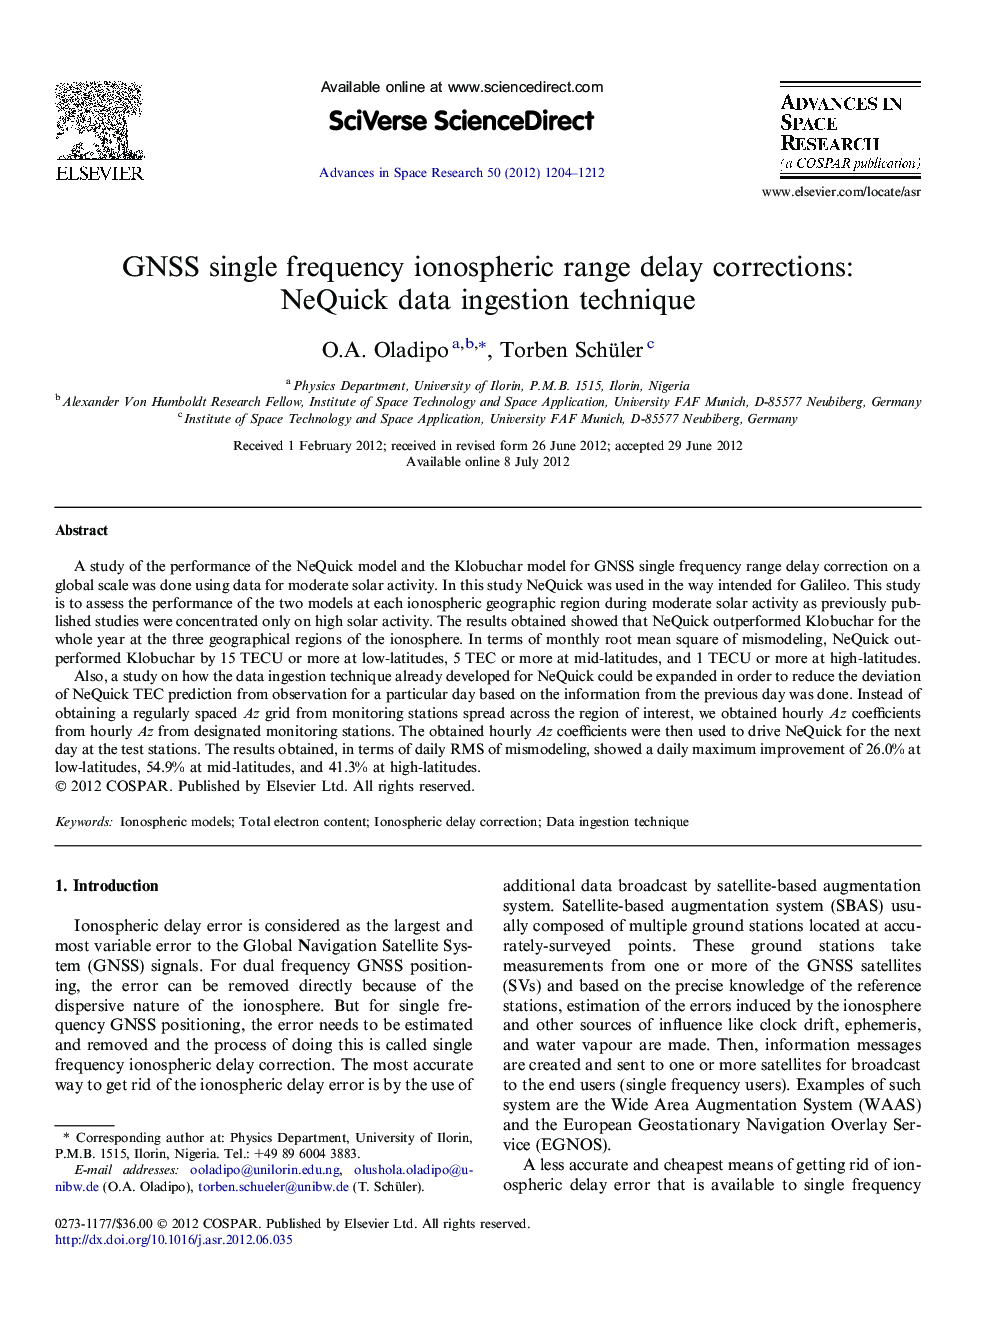 GNSS single frequency ionospheric range delay corrections: NeQuick data ingestion technique